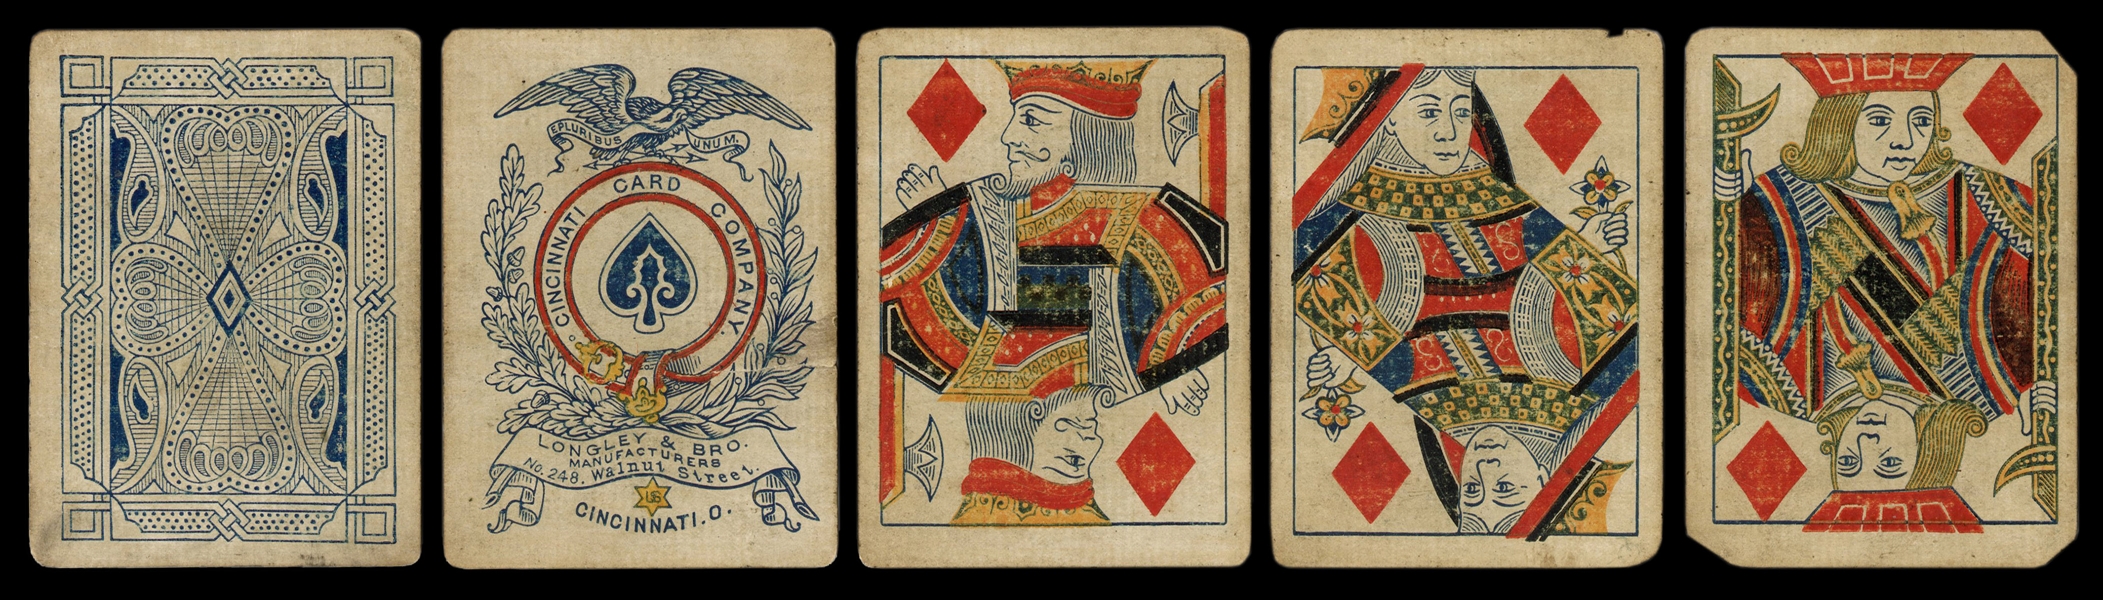  Longley Great Mogul Playing Cards. Cincinnati: Longley & Br...